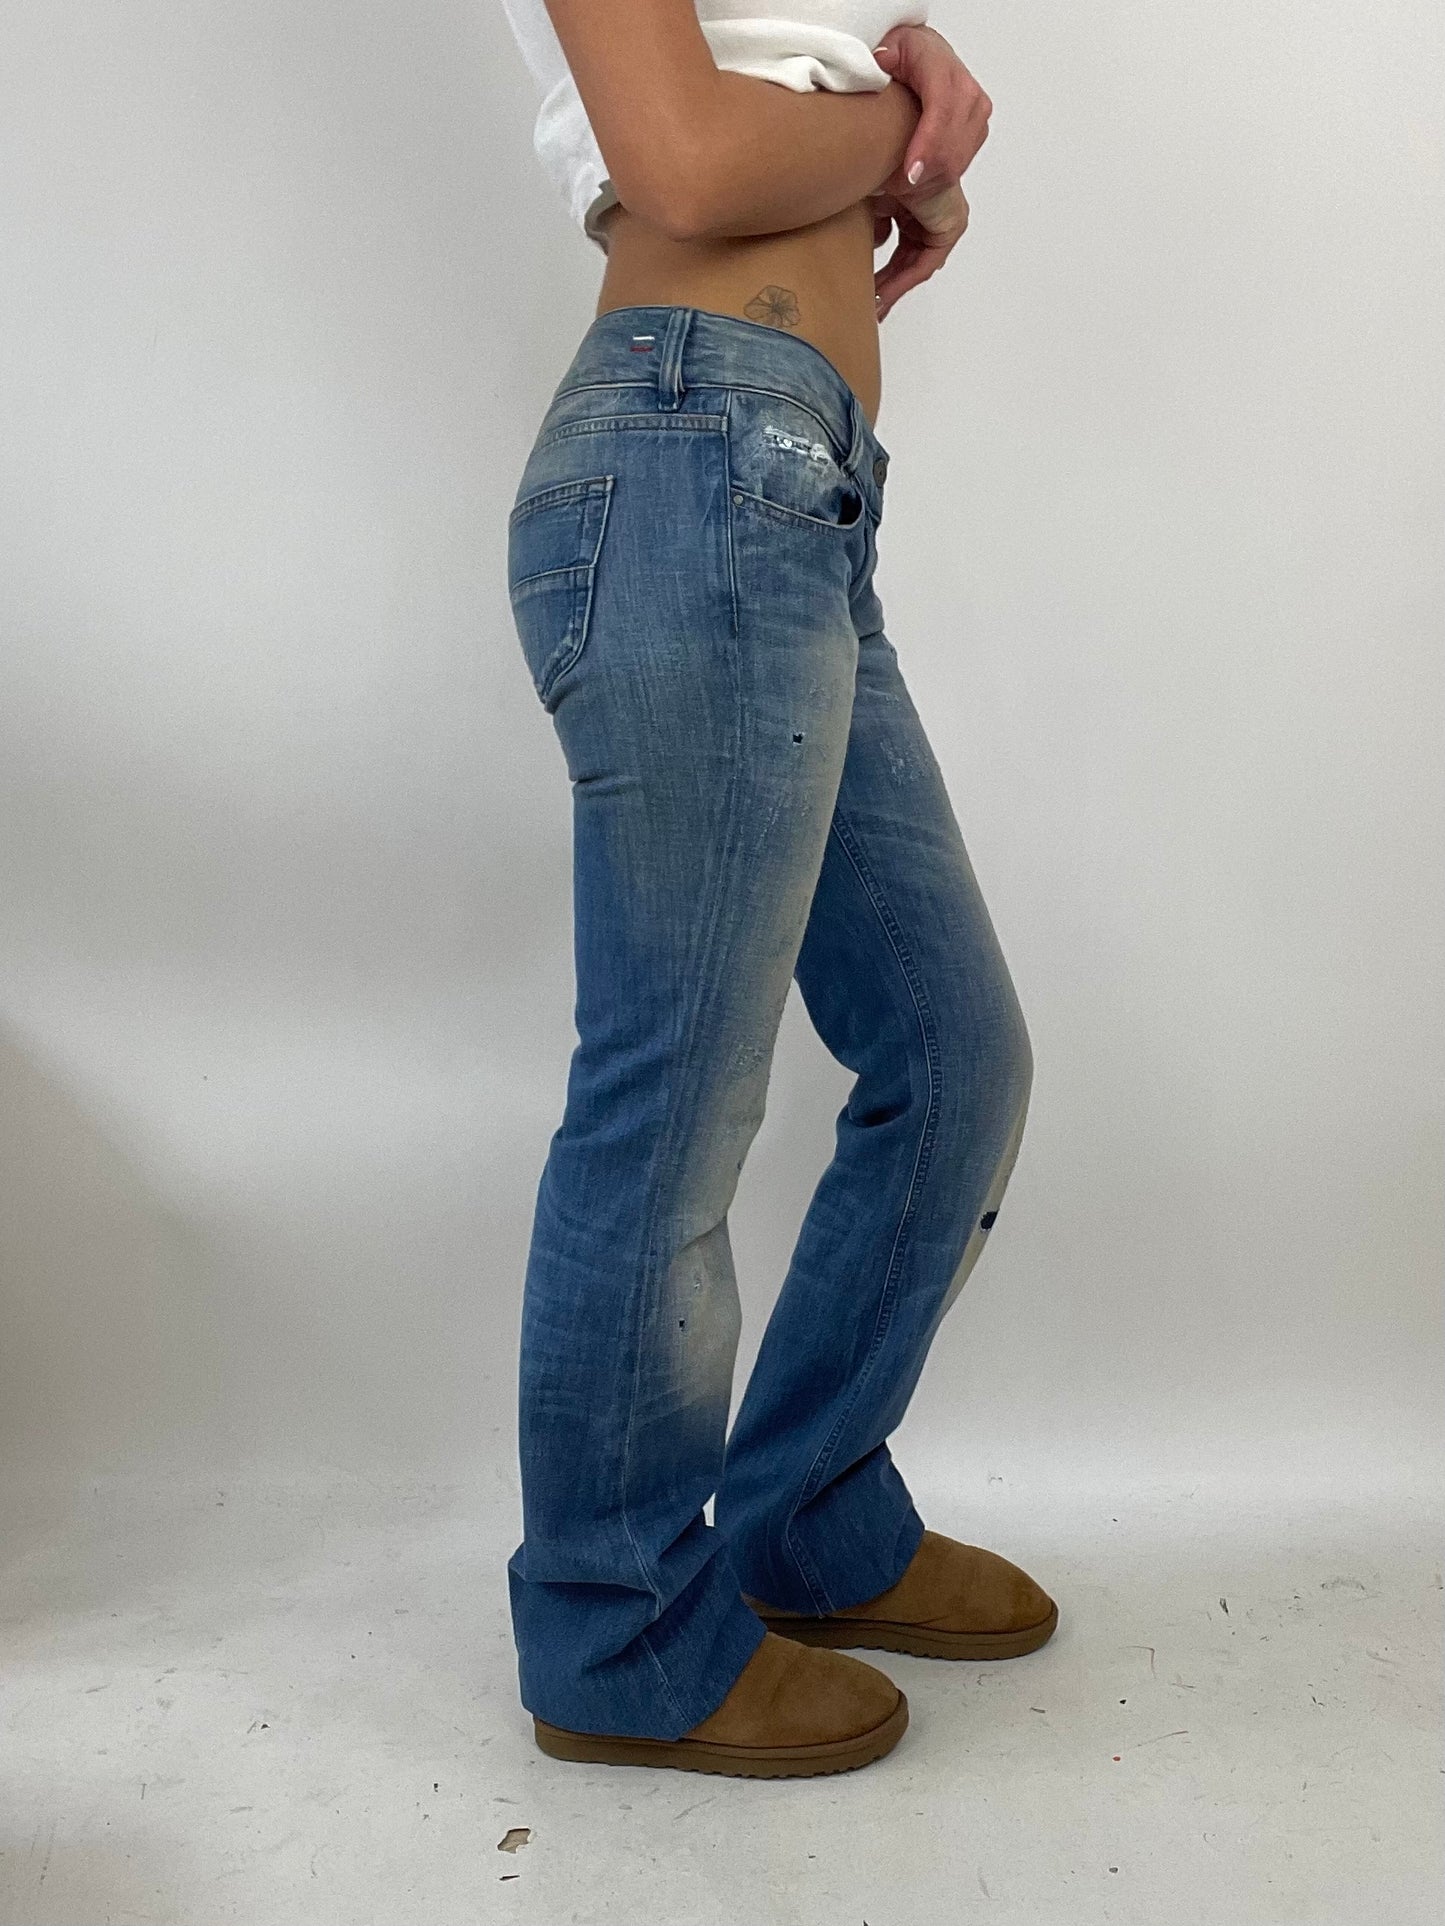 ADDISON RAE DROP | small denim diesel distressed jeans